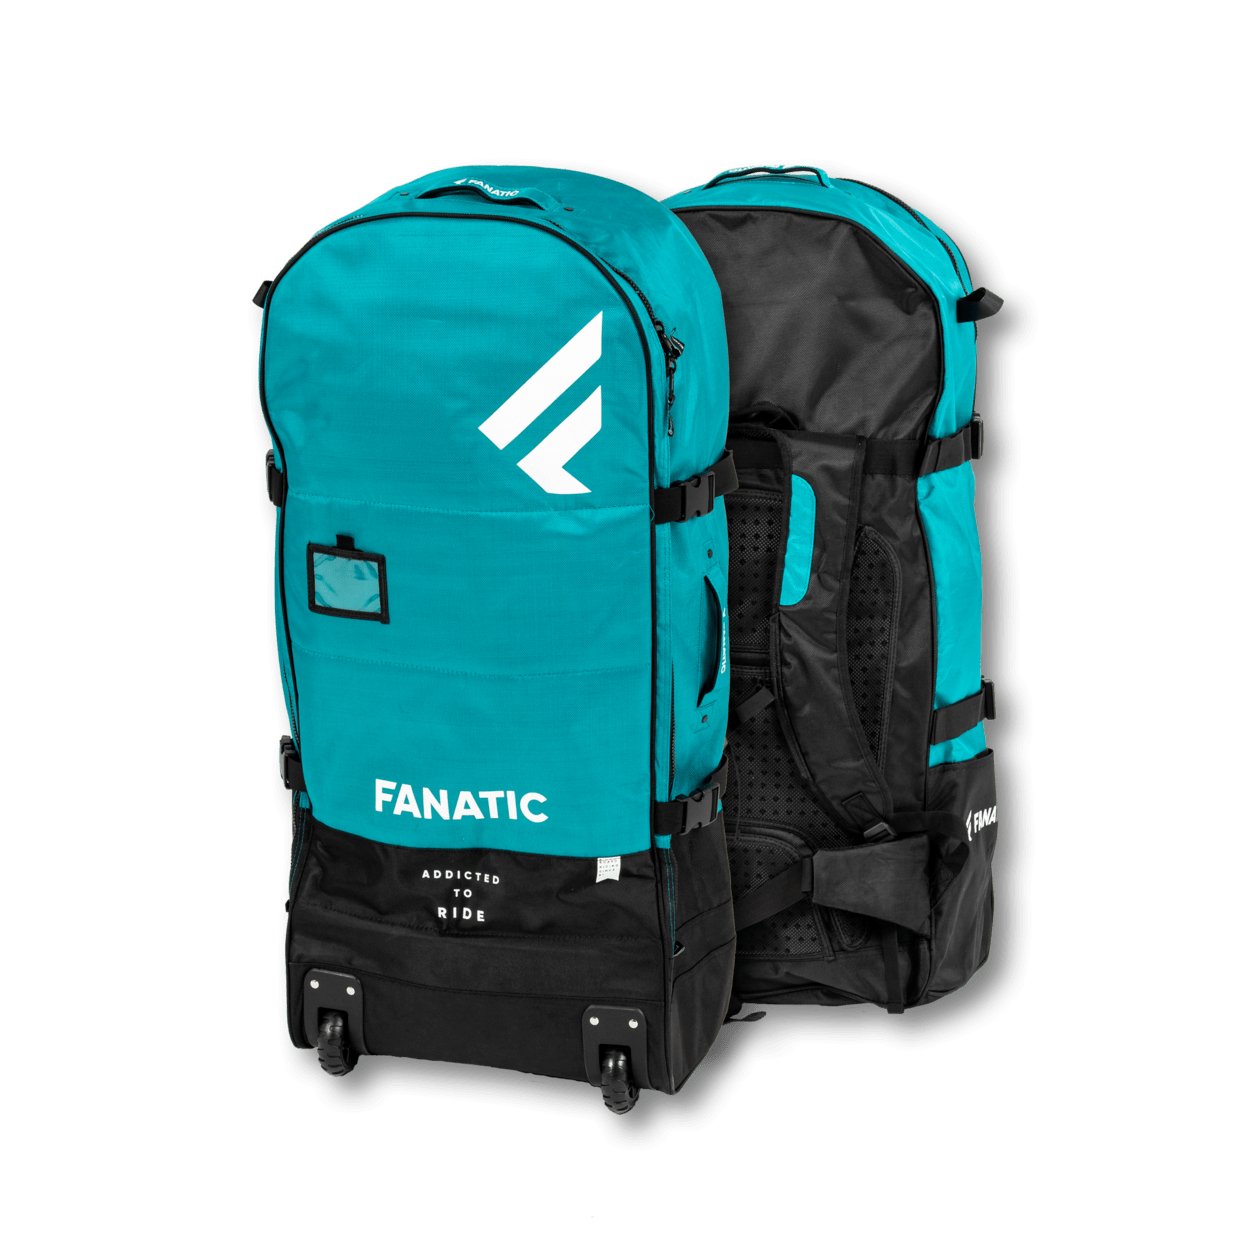 Fanatic Gearbag Premium iSUP 2023 - Worthing Watersports - 9008415928002 - Spareparts - Fanatic SUP